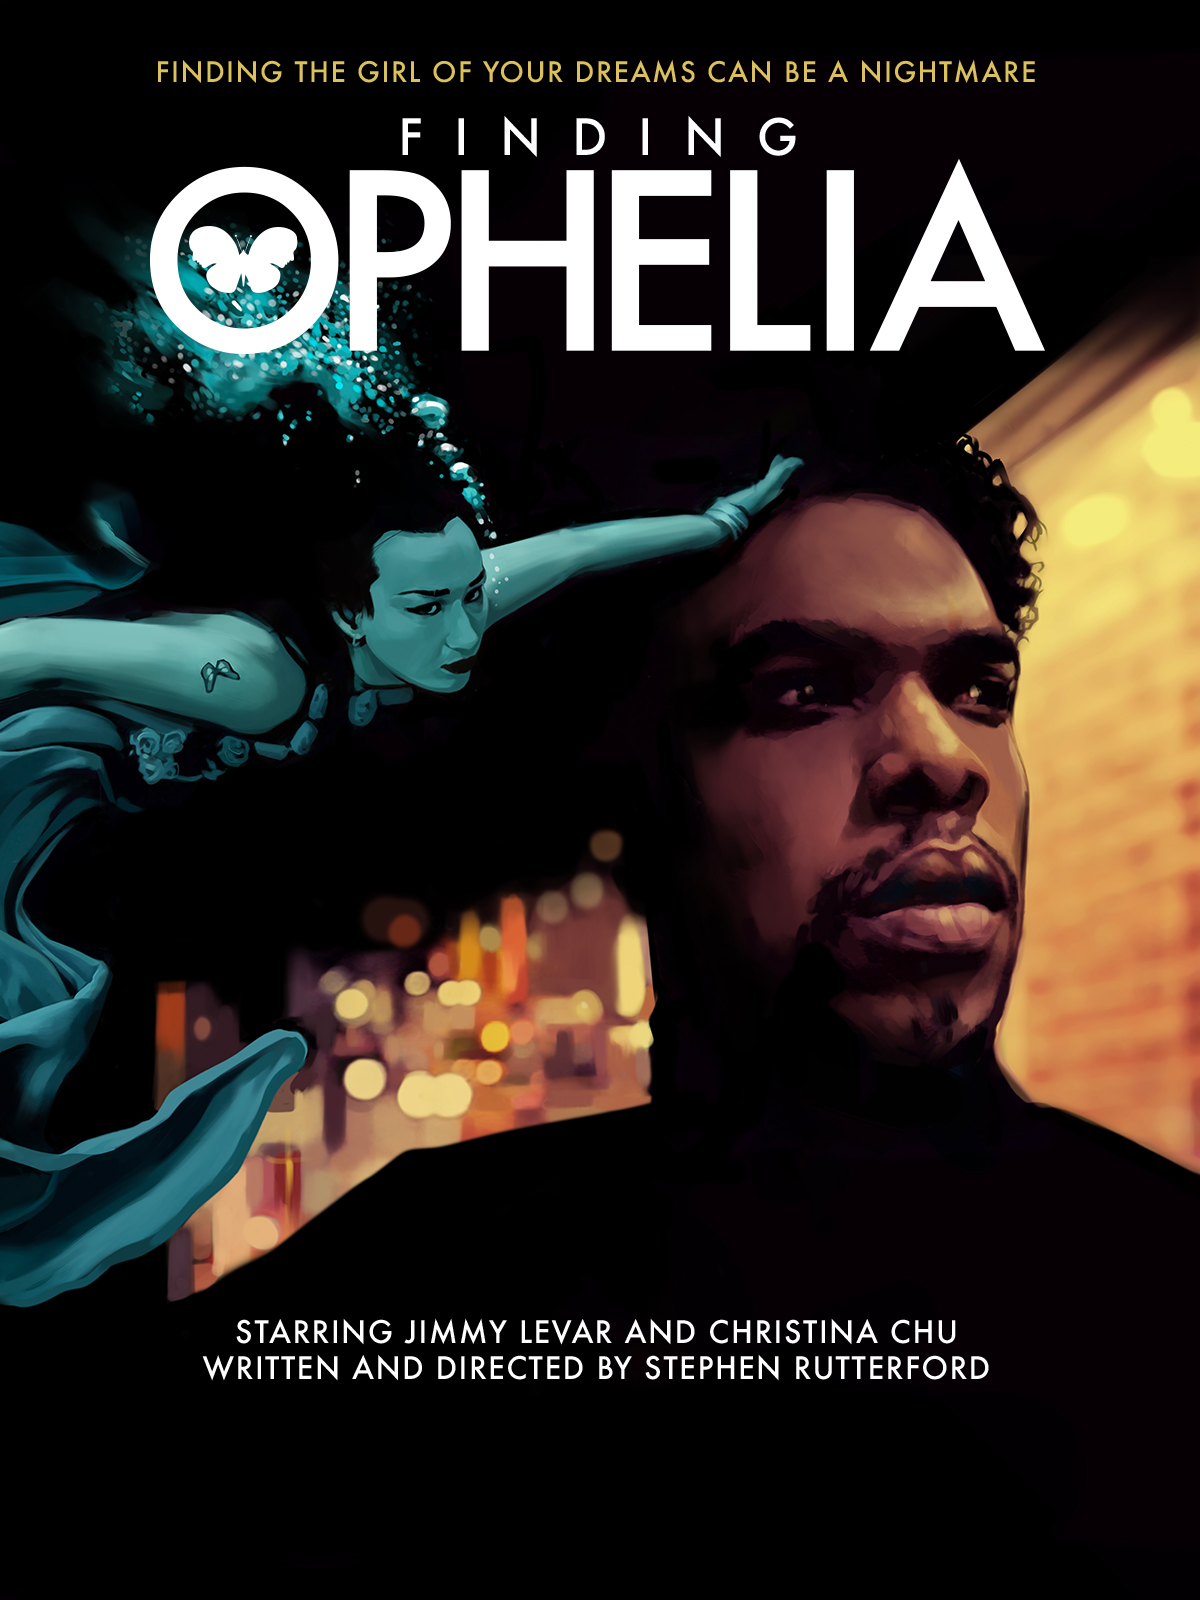 Nonton film Finding Ophelia layarkaca21 indoxx1 ganool online streaming terbaru